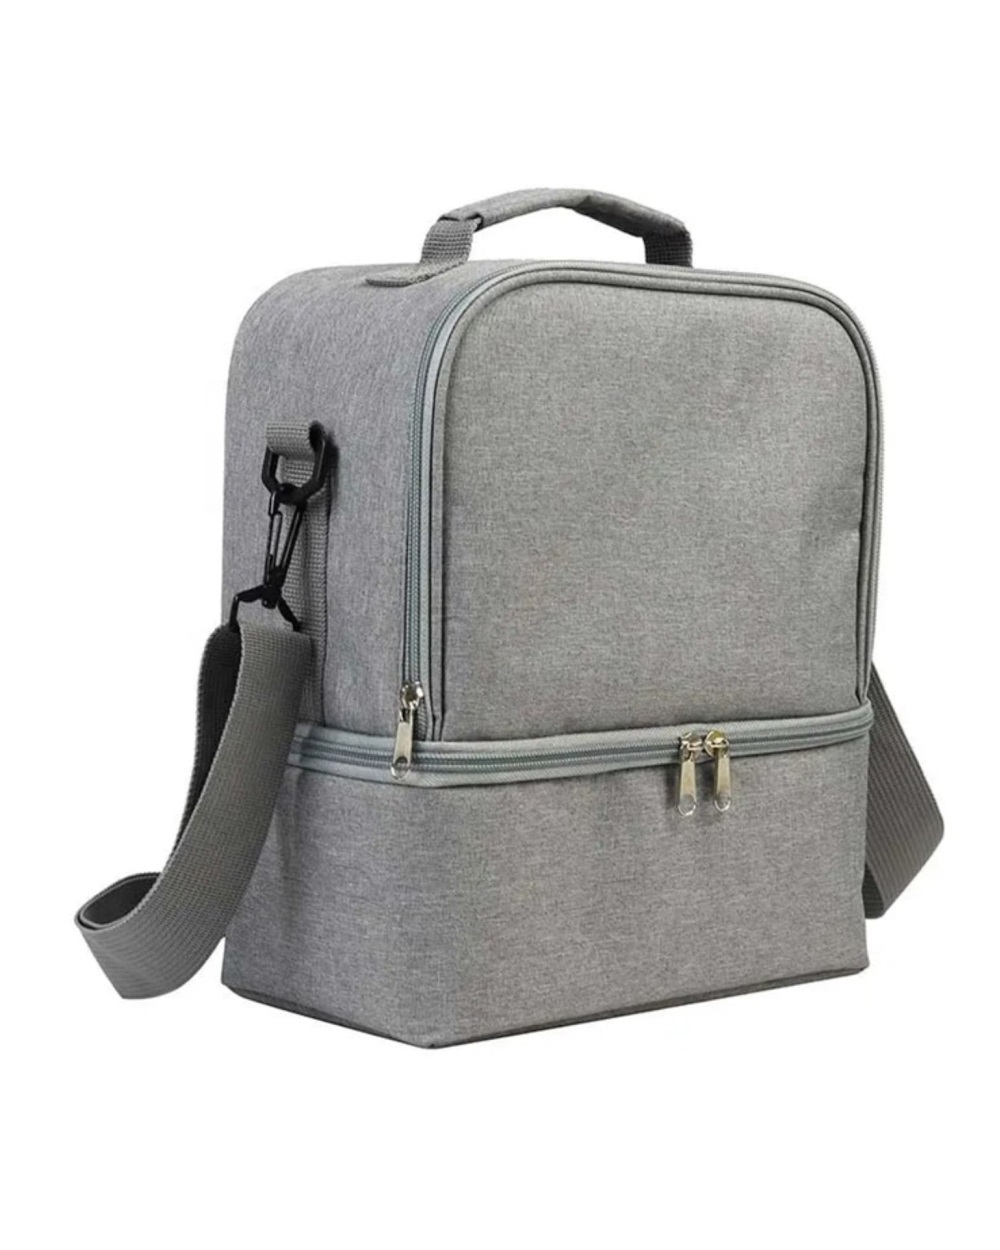 insulatedlunchbag gray front 1